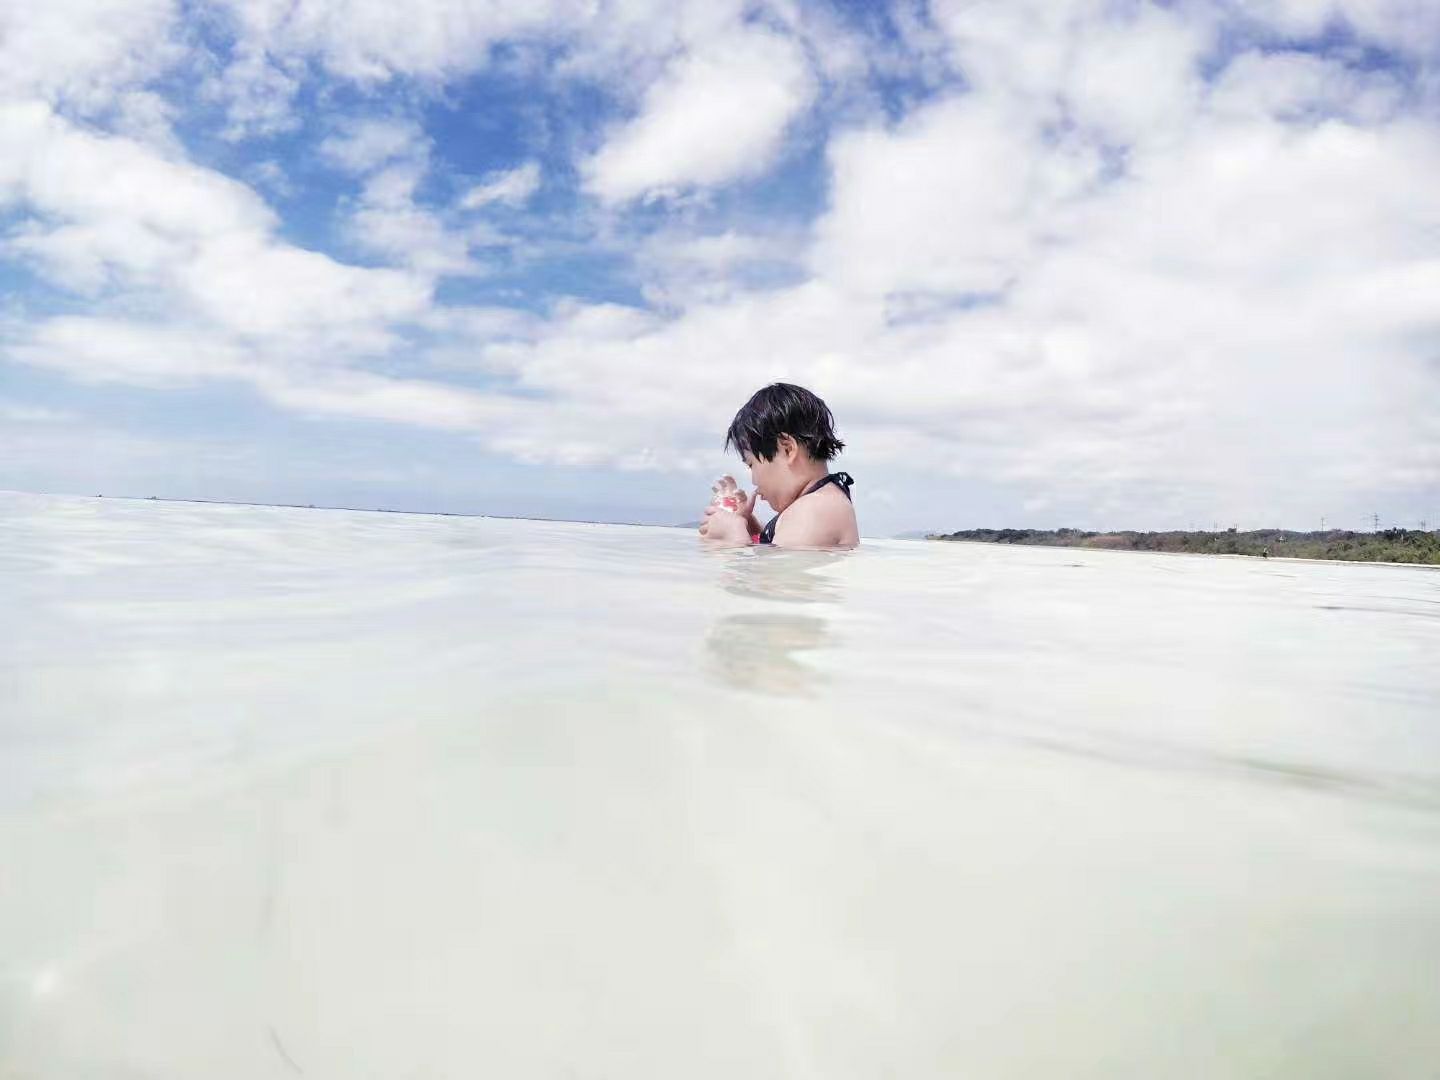 Kondoi海滩是竹富岛最好的海滩，被誉为日本前10大海滩之一，海水透明度极高，沙子也特别轻柔细软。